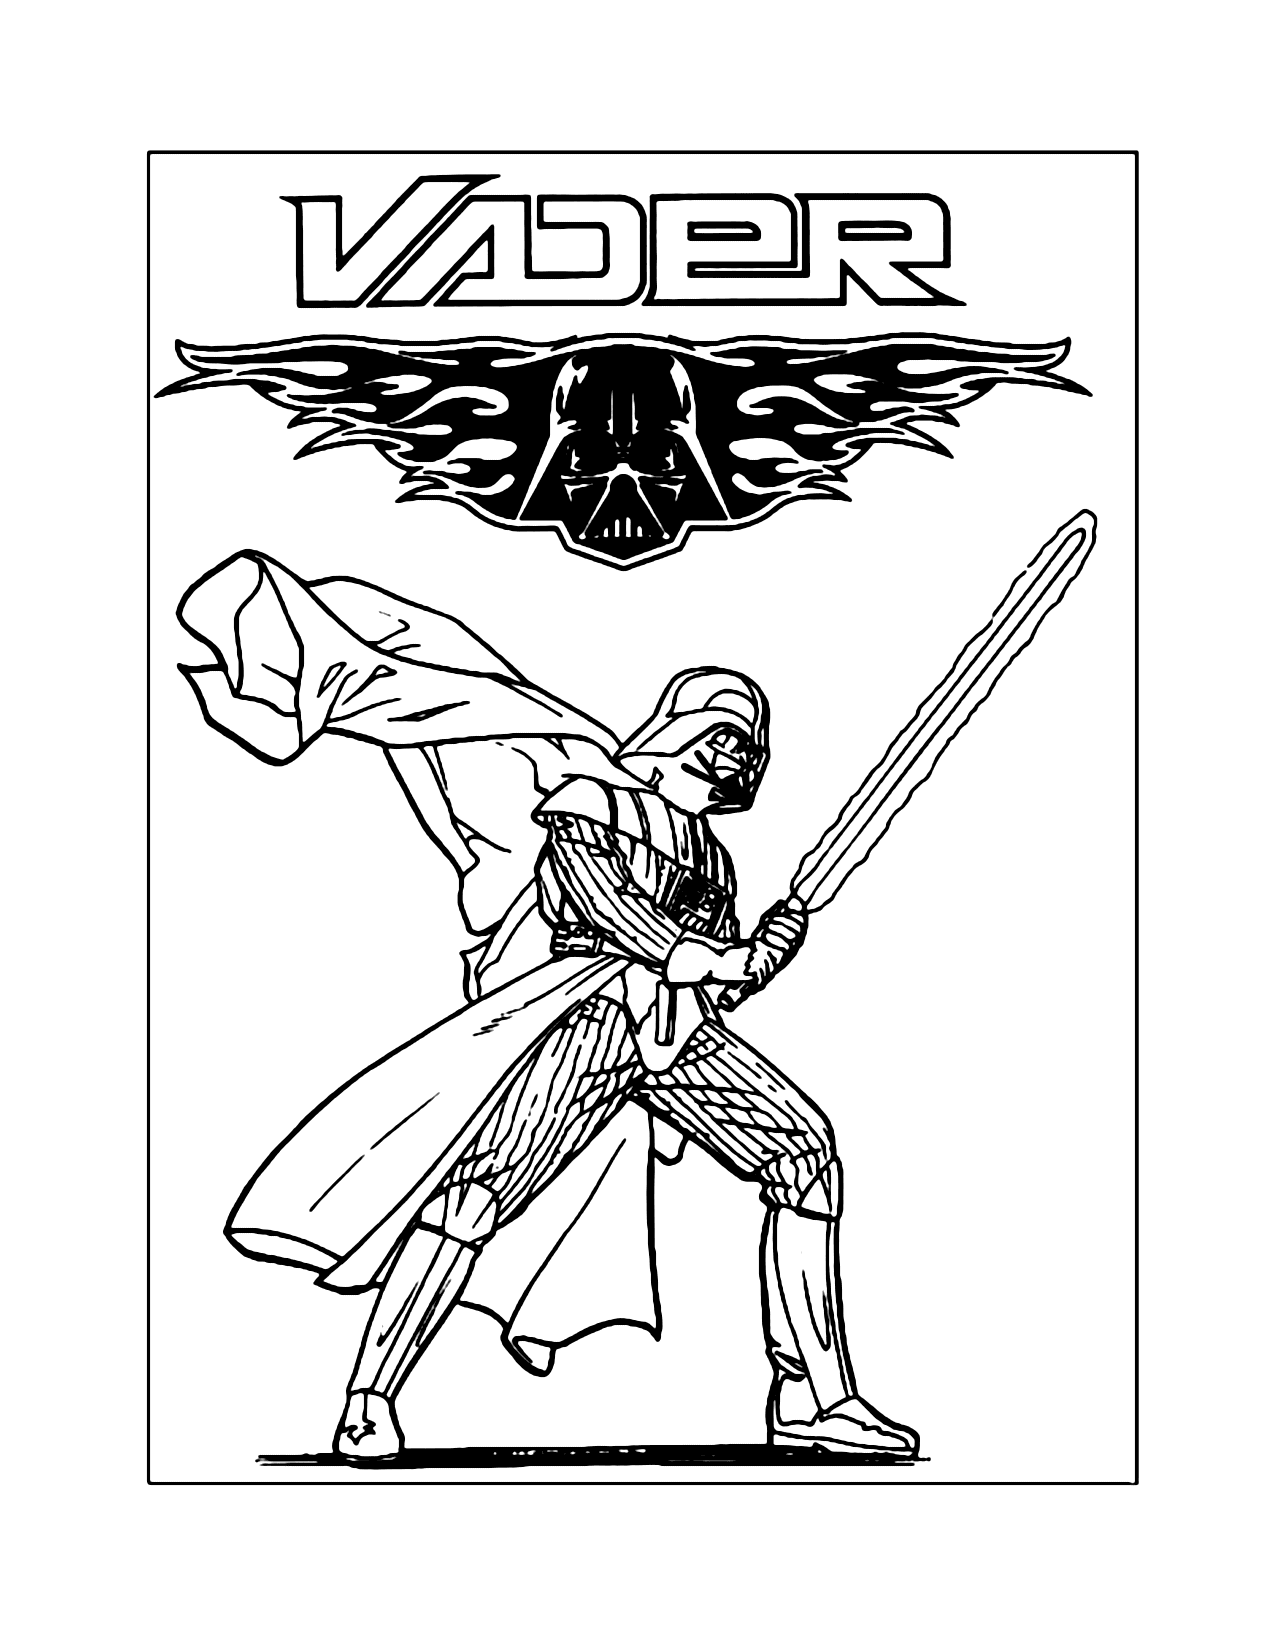 Darth Vader Coloring Page